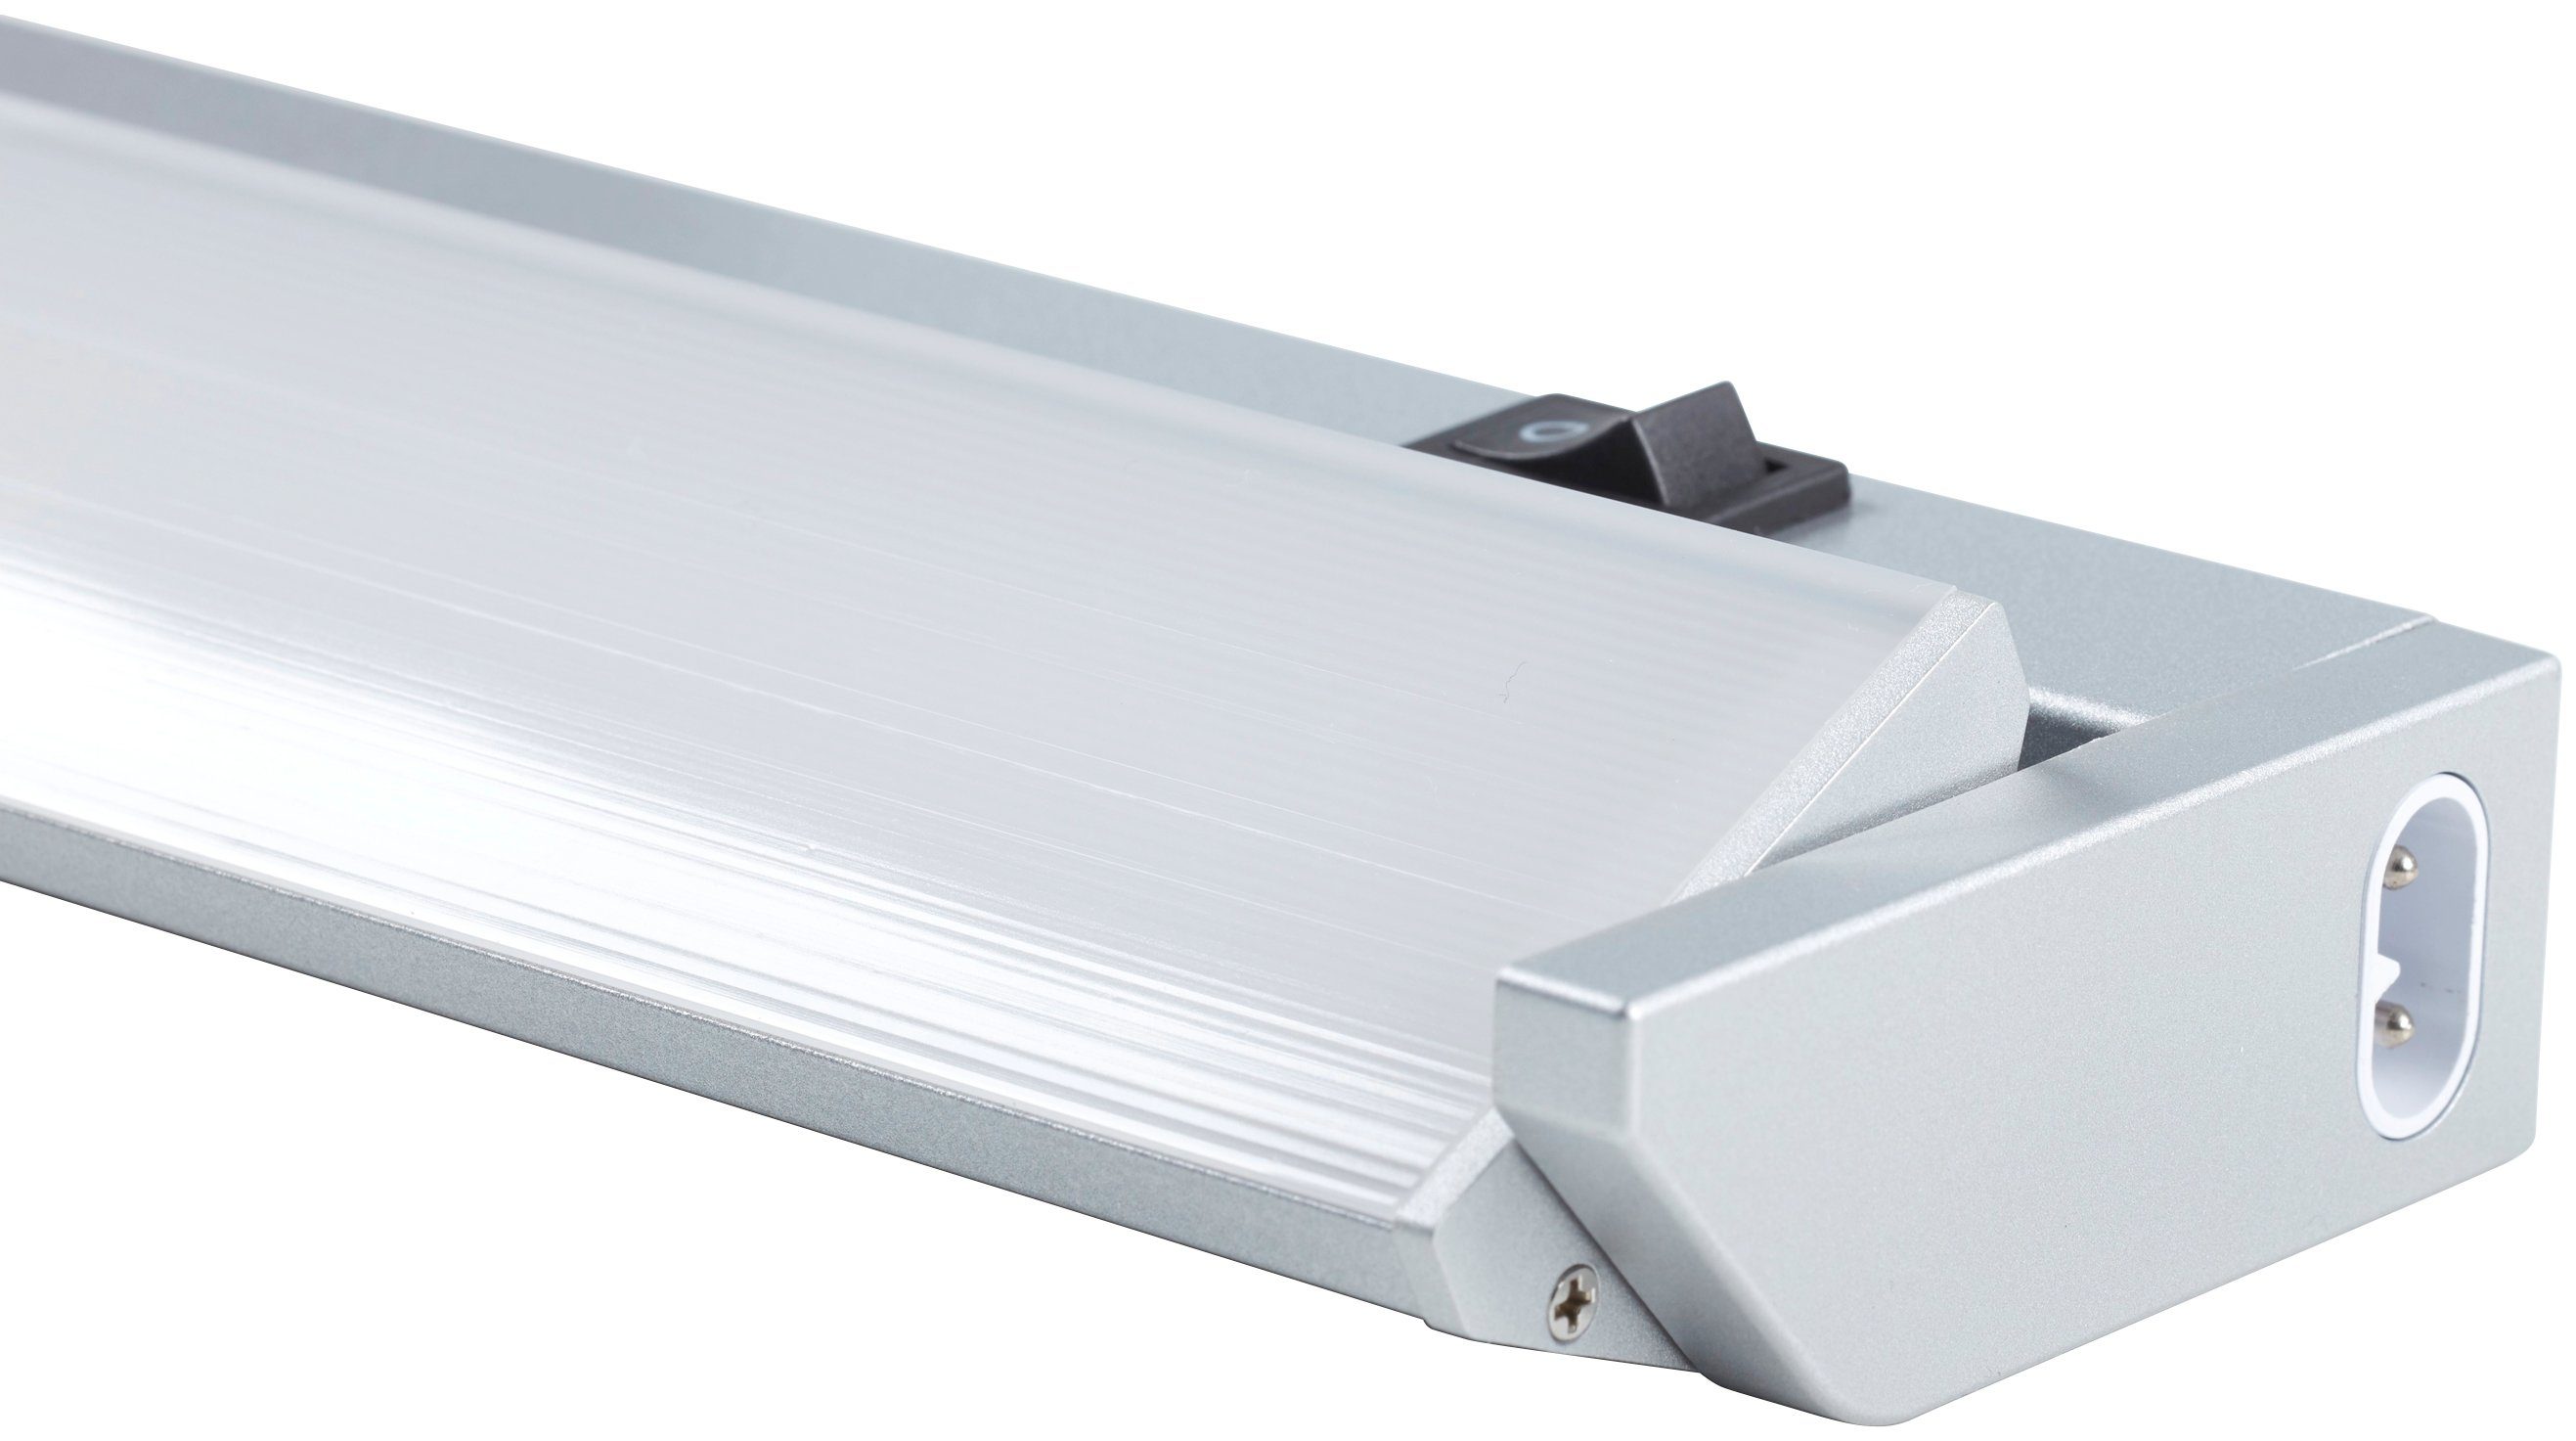 Loevschall LED Unterbauleuchte LED integriert, LED Hohe Striplight 579mm, Lichtausbeute, Neutralweiß, fest Ein-/Ausschalter, schwenkbar